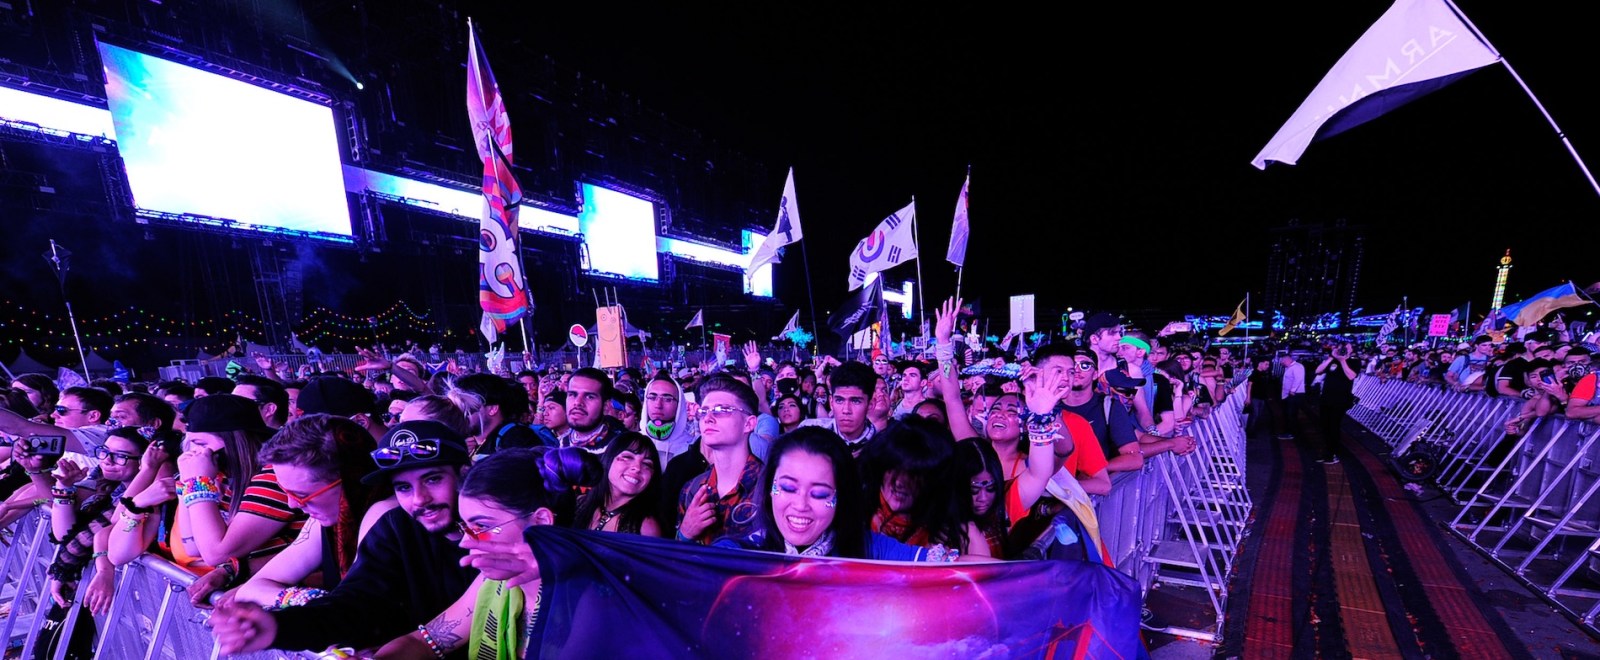 music-festival-crowd-audience-electric-daisy-carnival-edc-getty-full.jpg